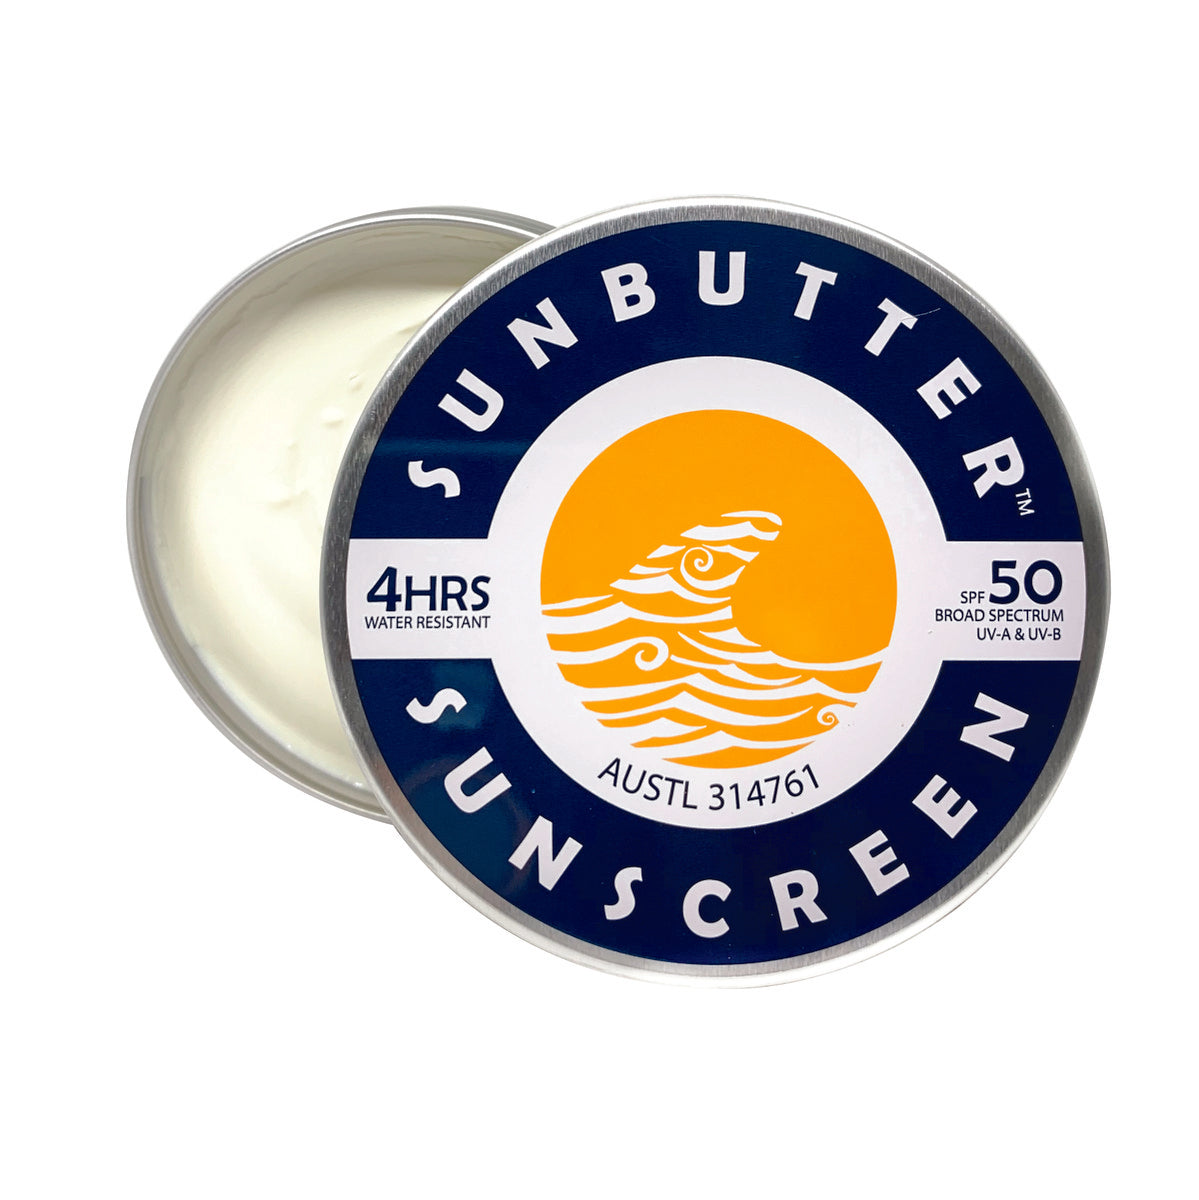 SunButter Skincare Sunscreen SPF 50 Tin 100g